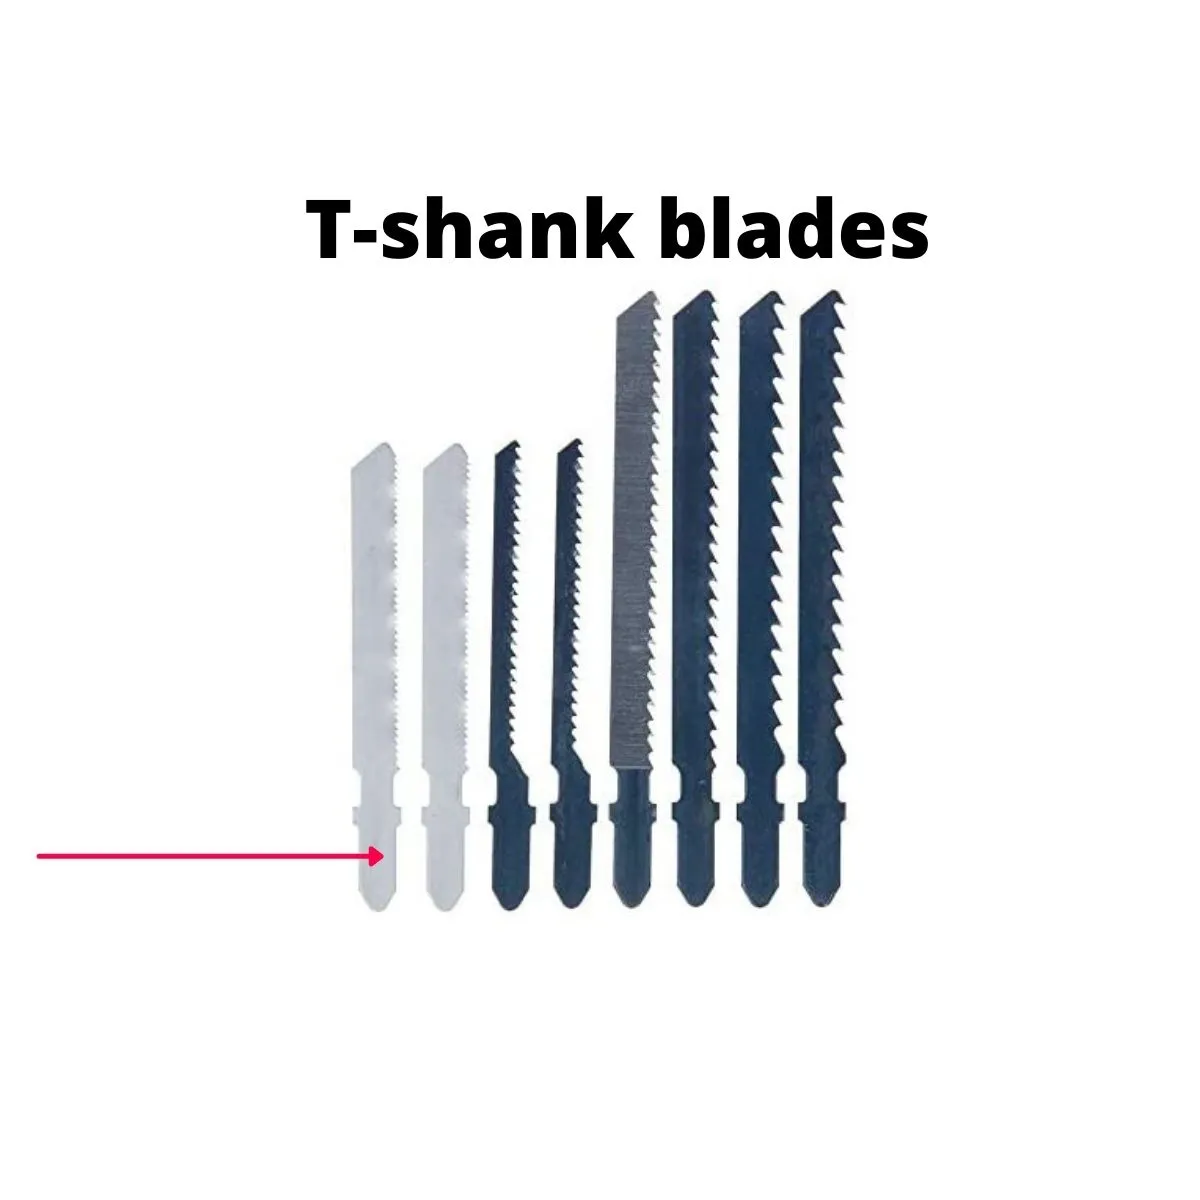 jigsaw blades t-shank